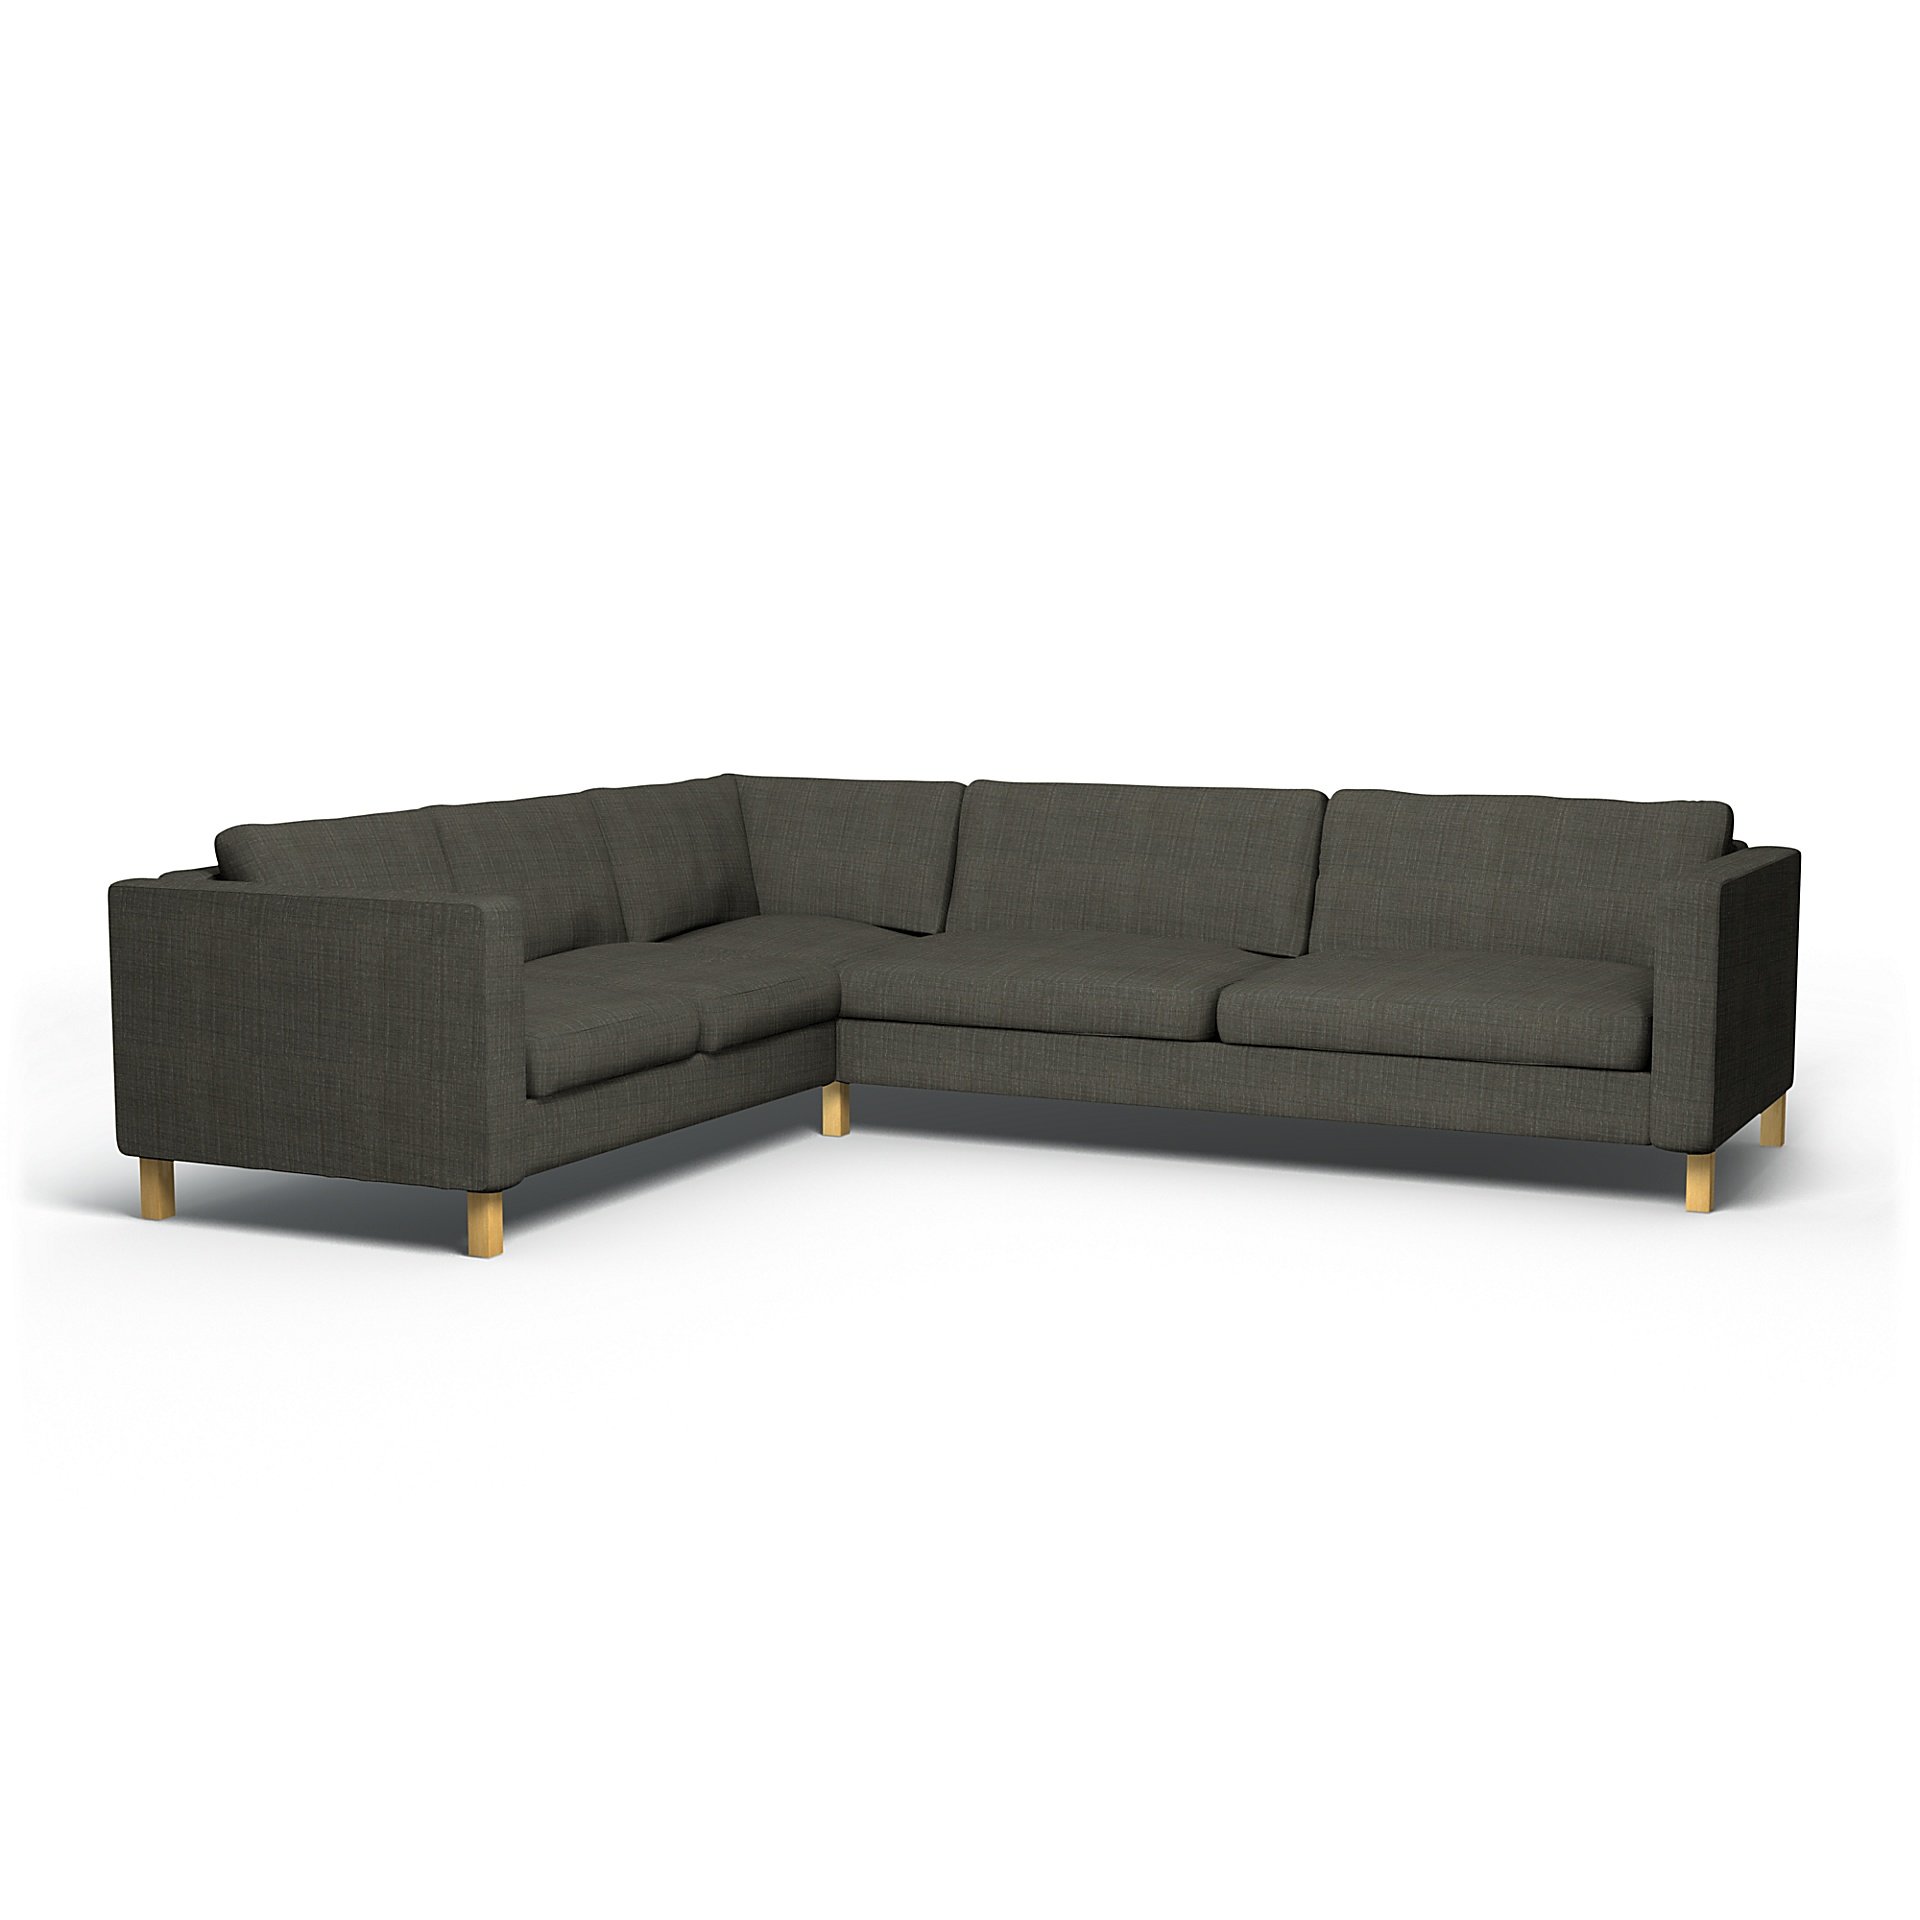 IKEA - Karlstad Corner Sofa Cover (2+3), Mole Brown, Boucle & Texture - Bemz